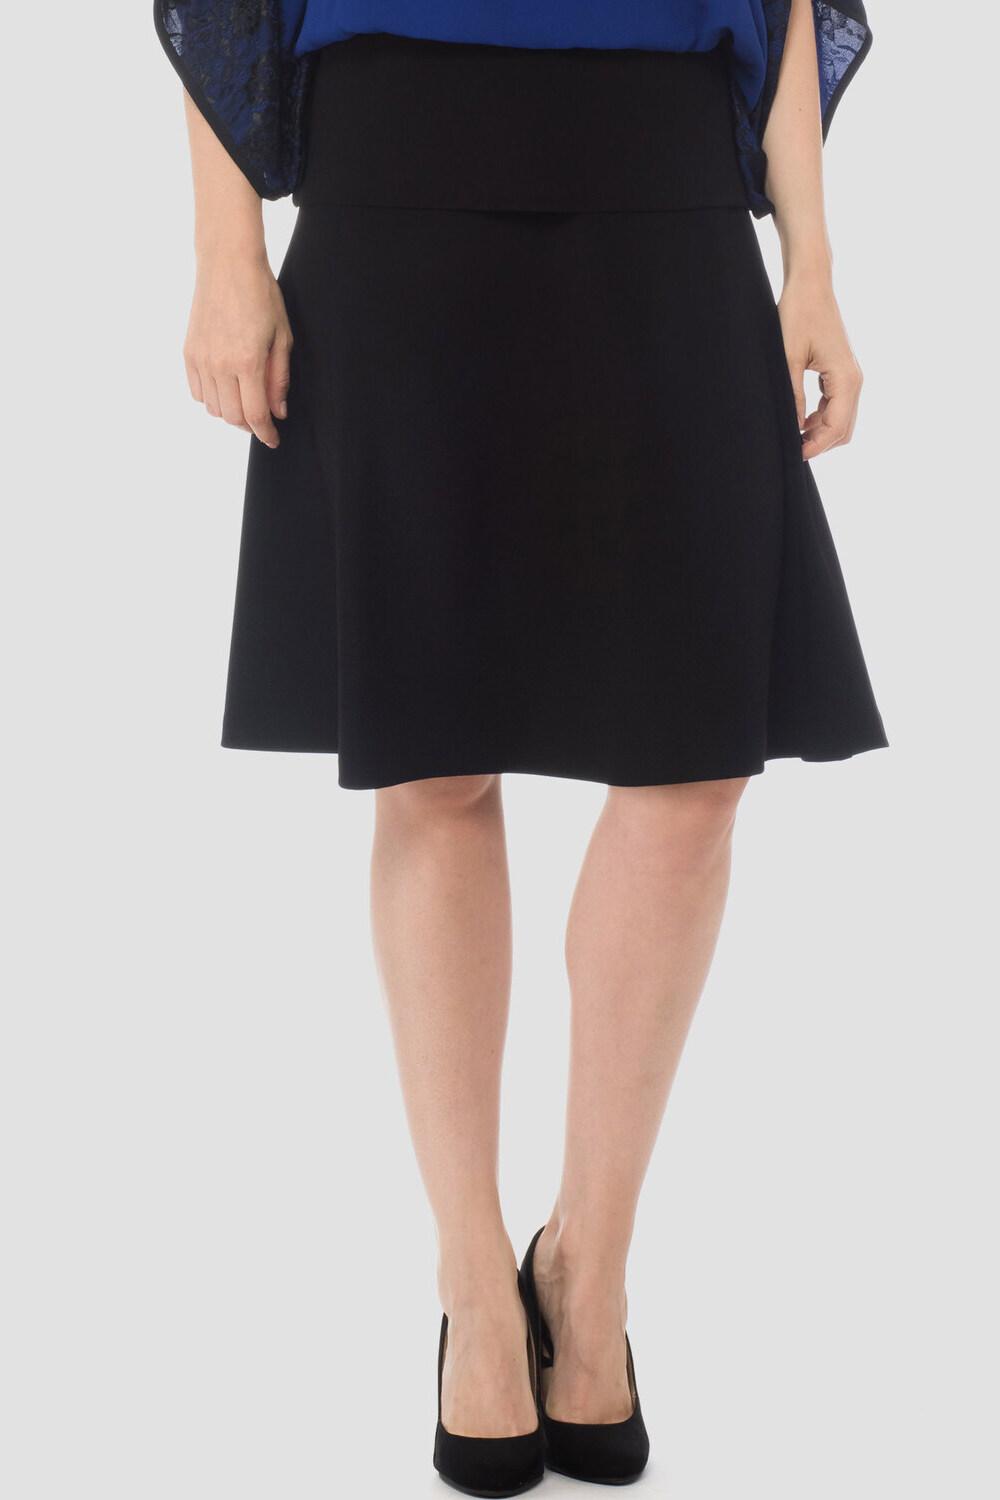 Joseph Ribkoff skirt style 184090X. Black